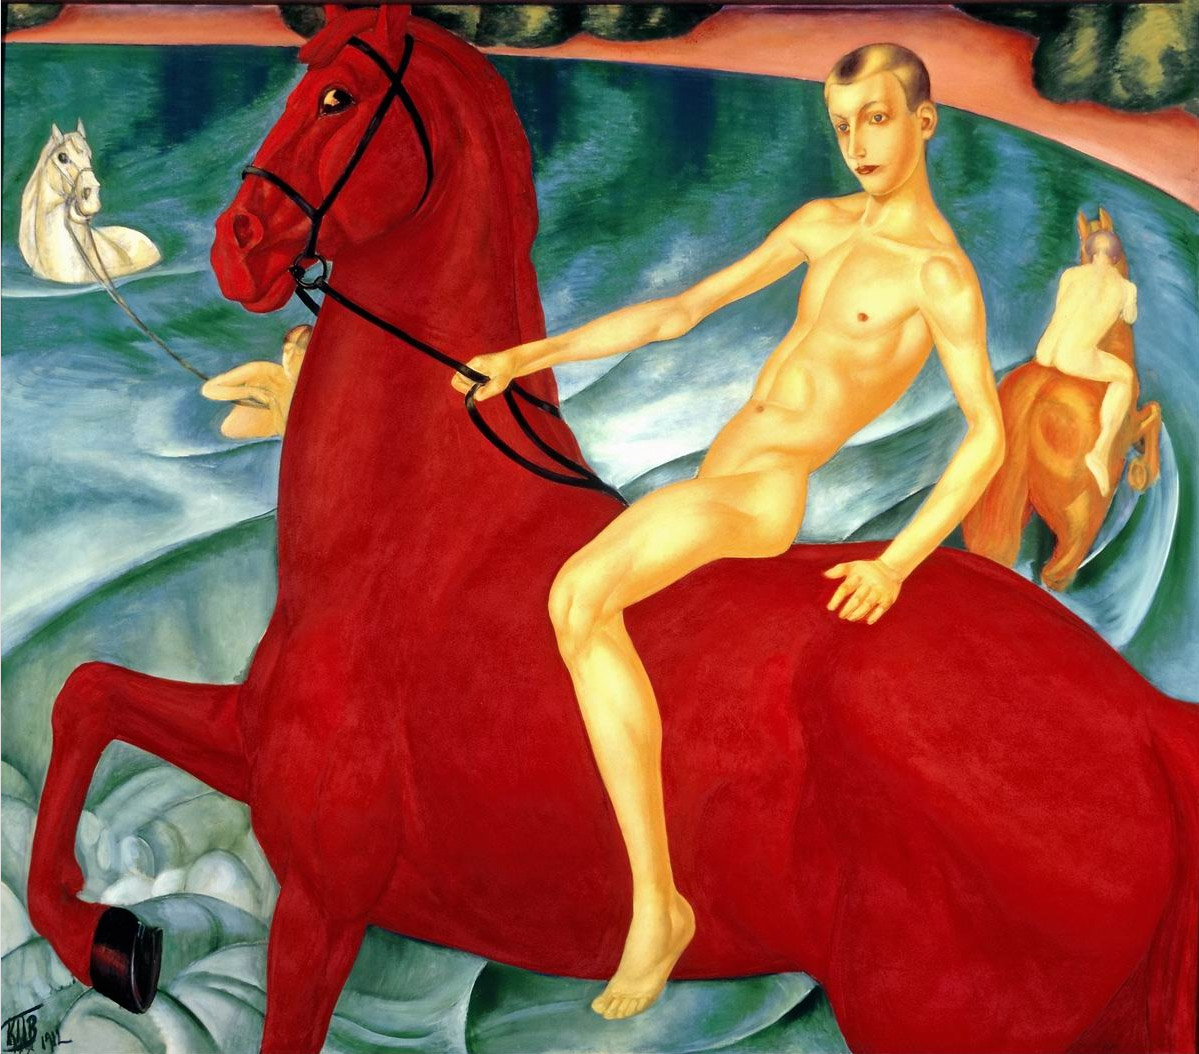 Петров-Водкин. Купание красного коня. 1912